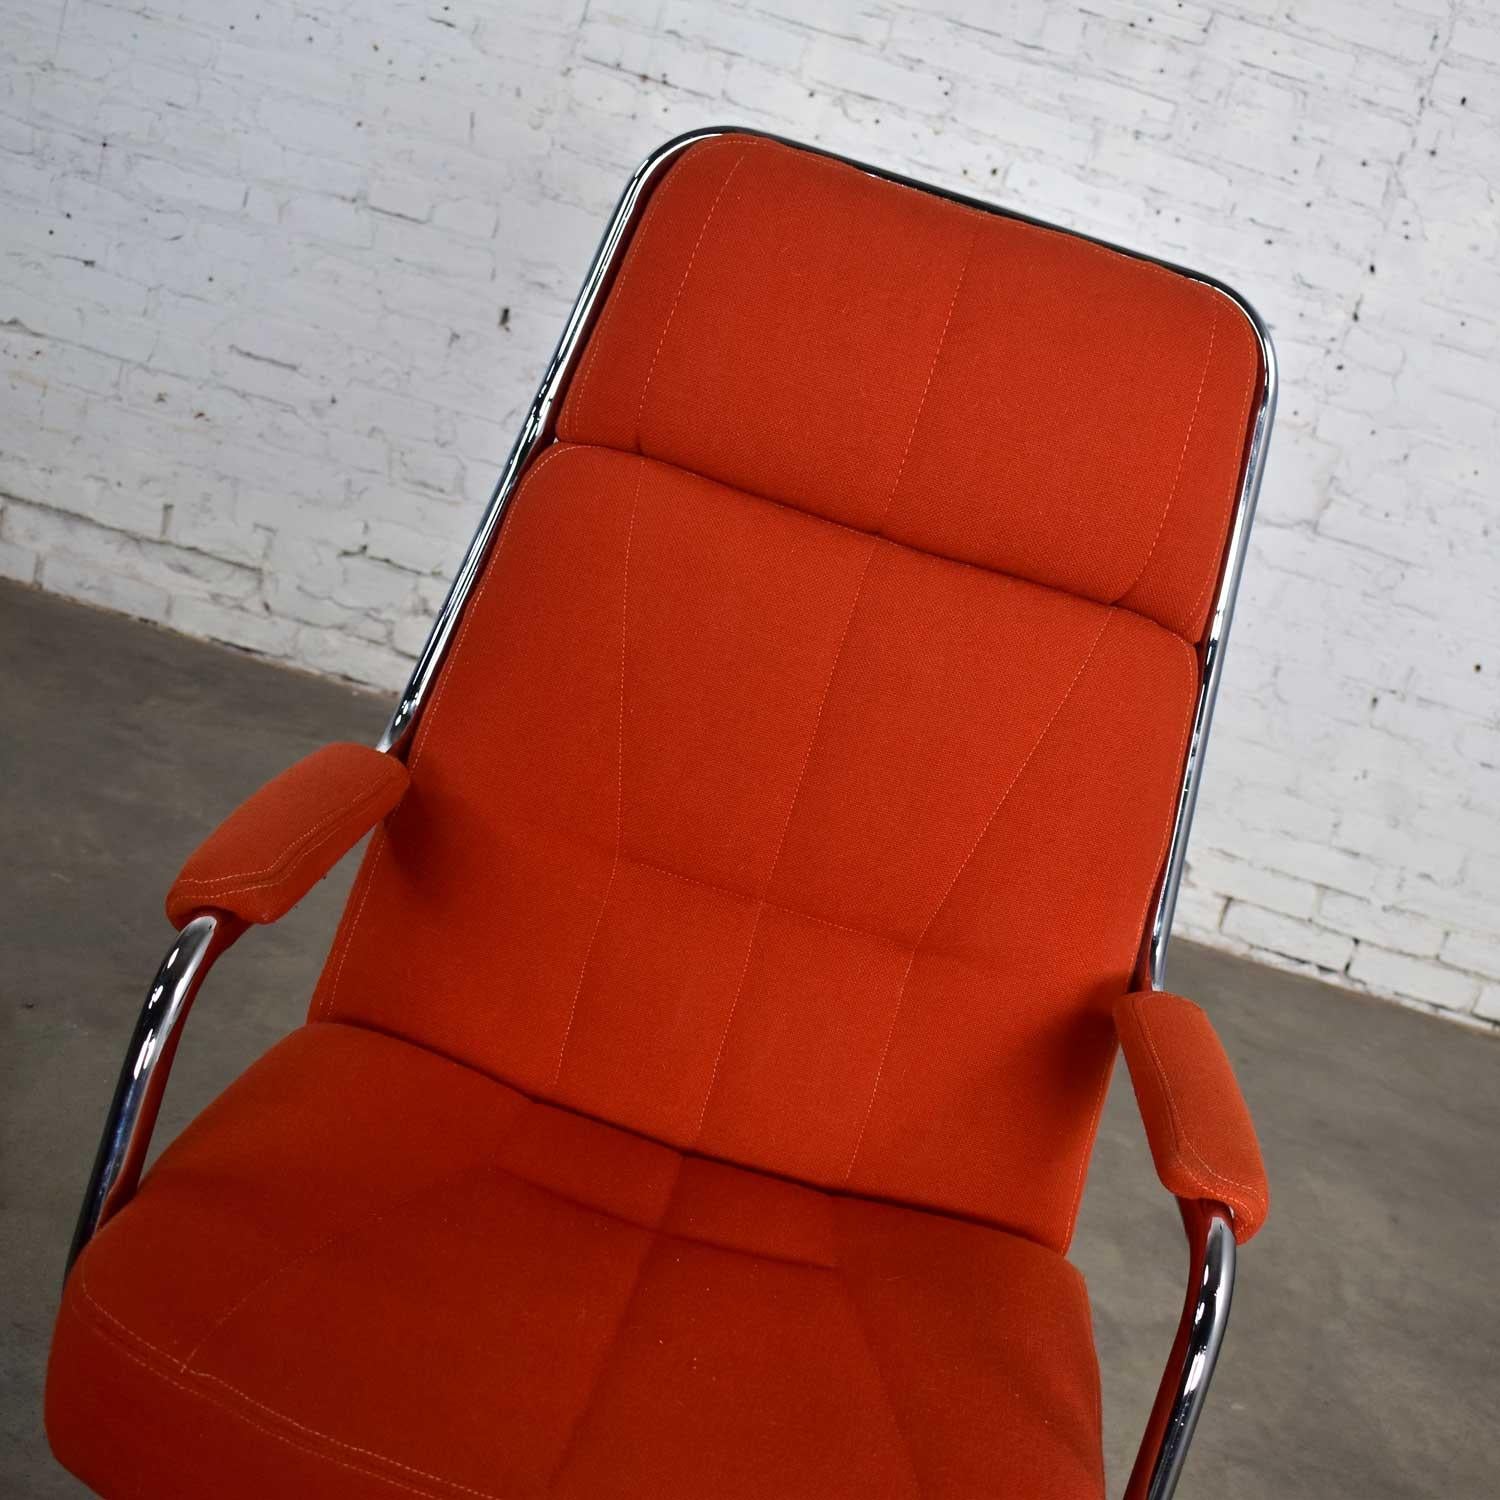 Chromcraft Adjustable Armed High Back Rolling Office Chair Orange Hopsack Fabric 1